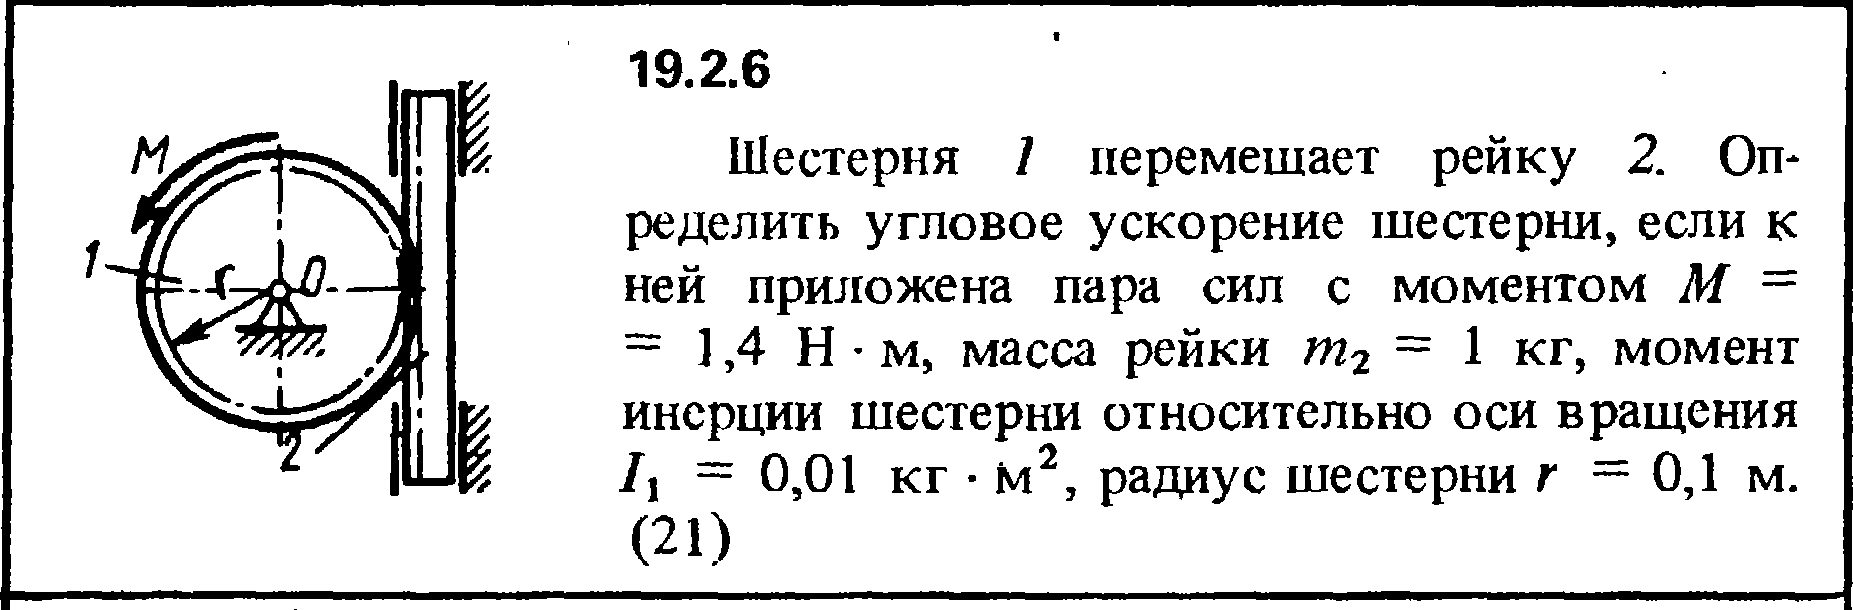 Решение 19.2.6 из сборника (решебника) Кепе О.Е. 1989